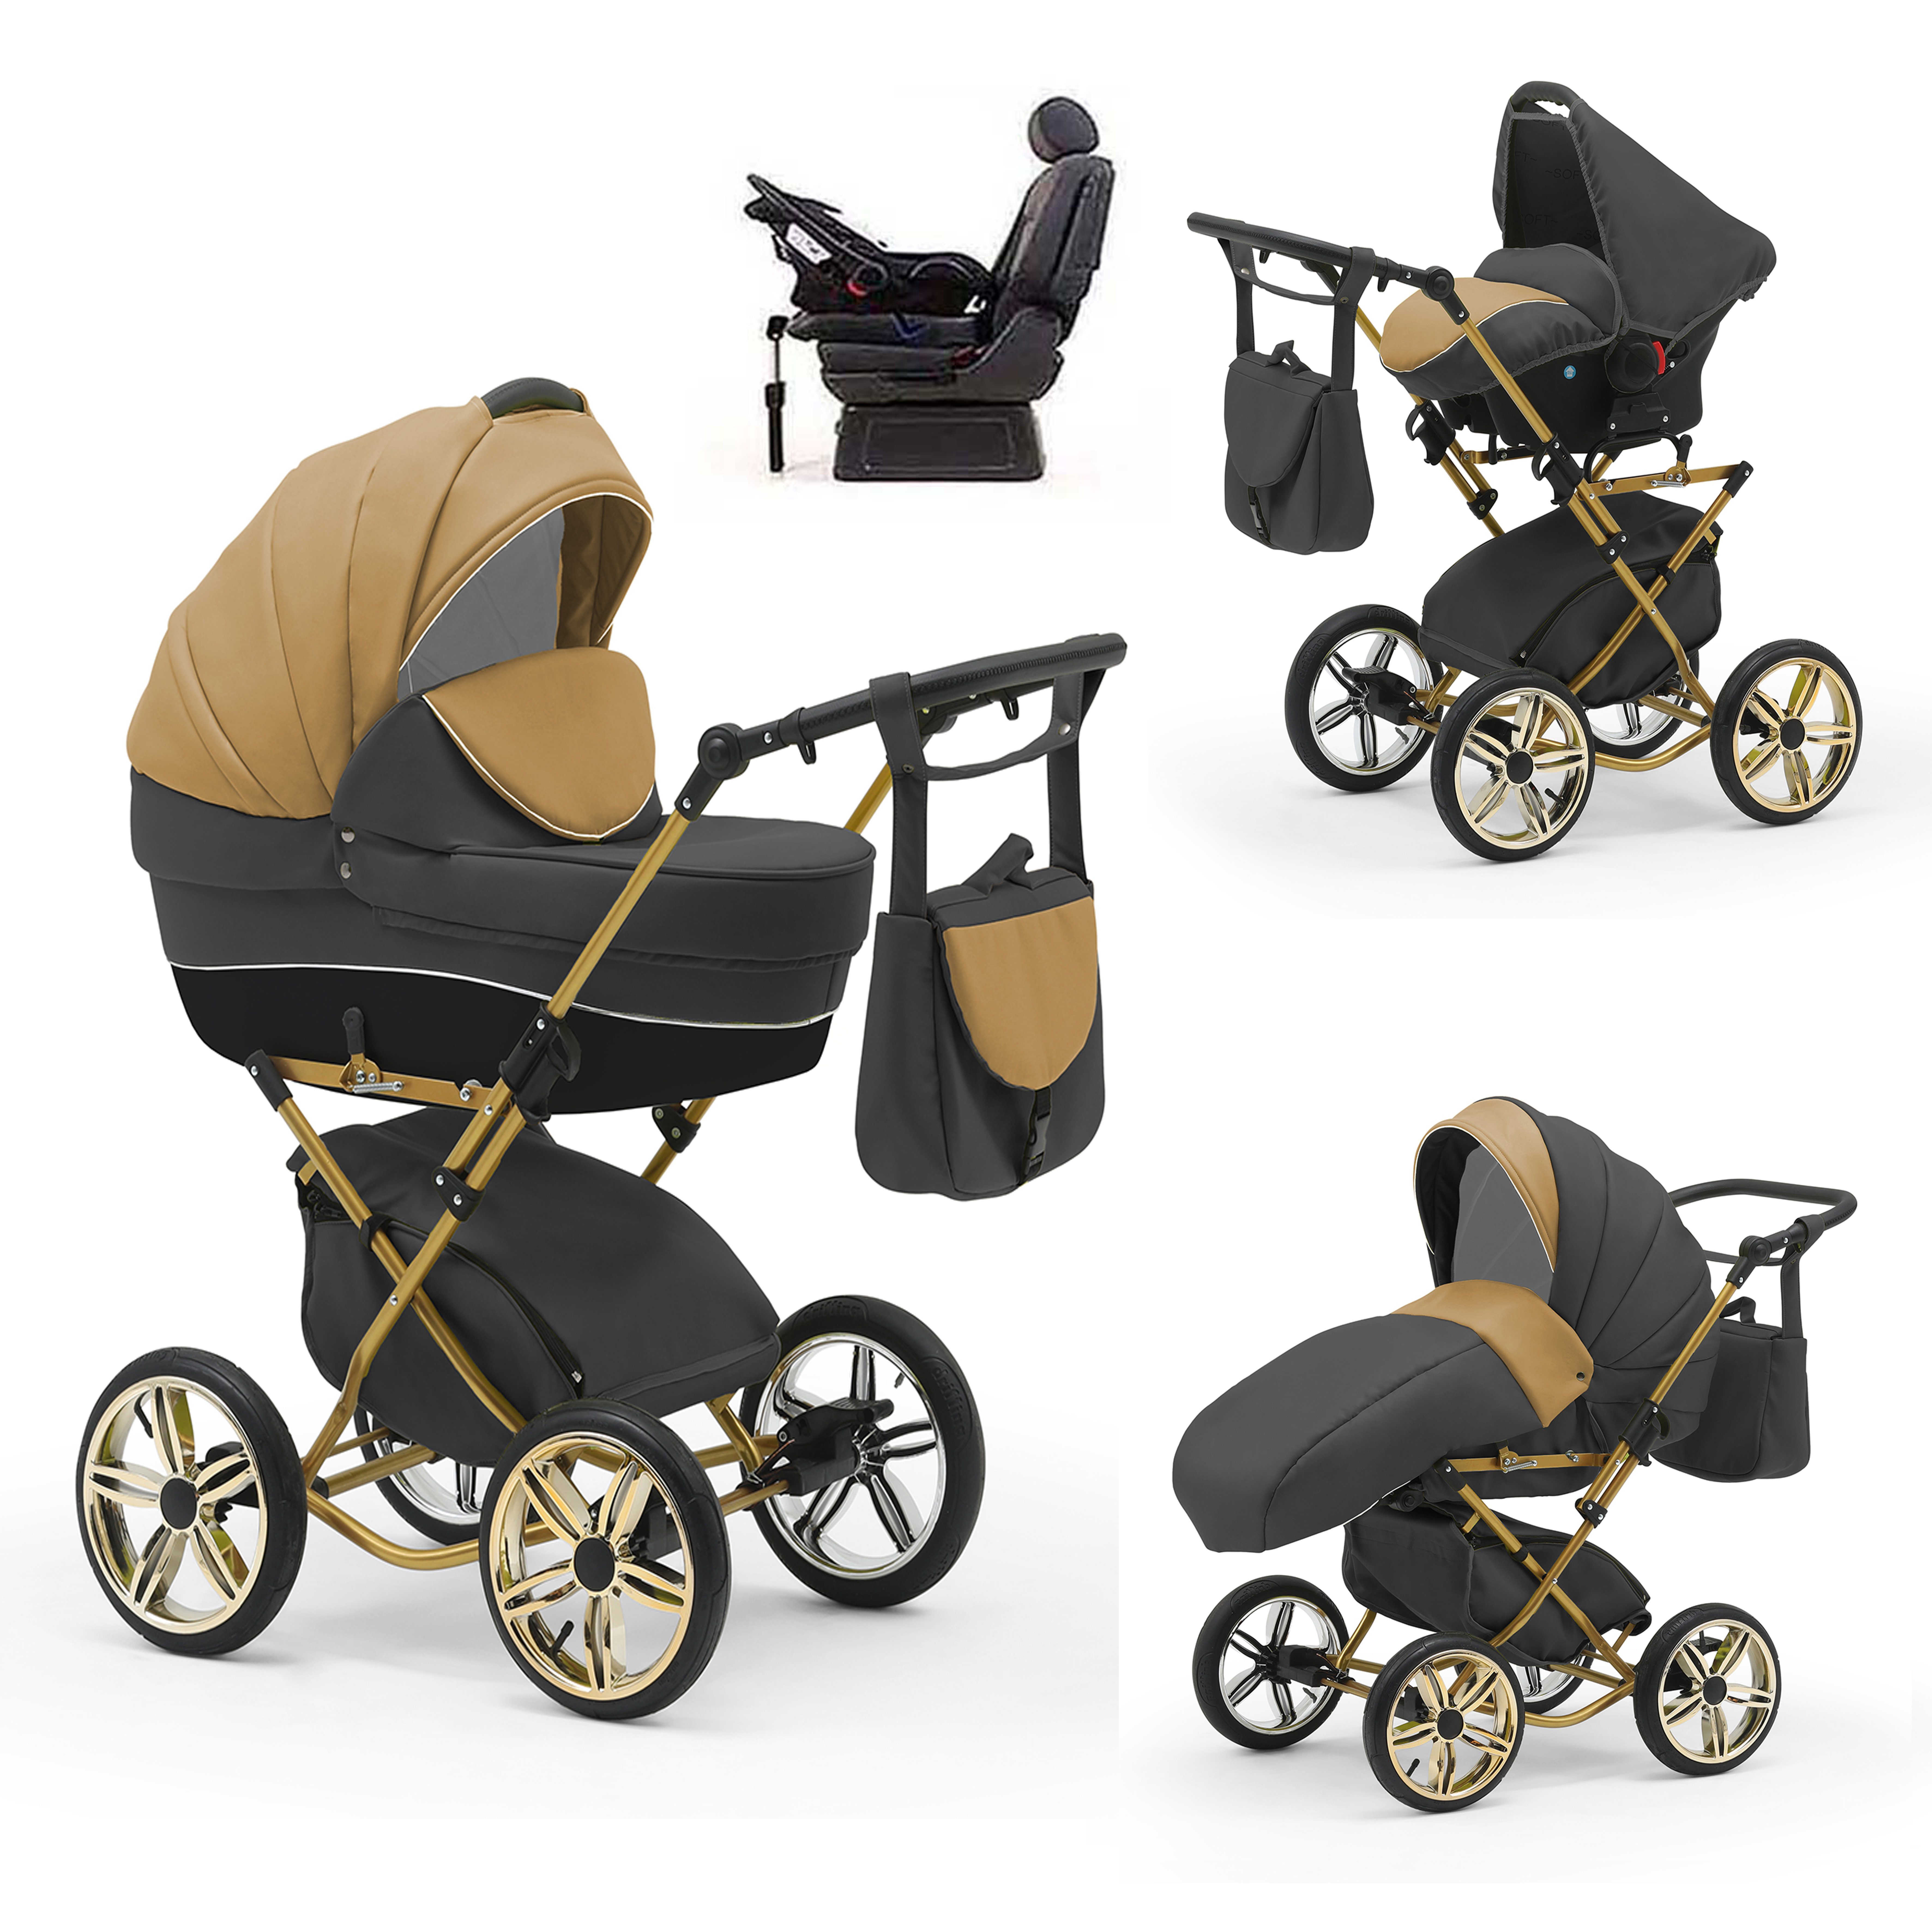 babies-on-wheels Kombi-Kinderwagen Sorento 4 in 1 inkl. Autositz und Iso Base - 14 Teile - in 10 Designs Beige-Grau